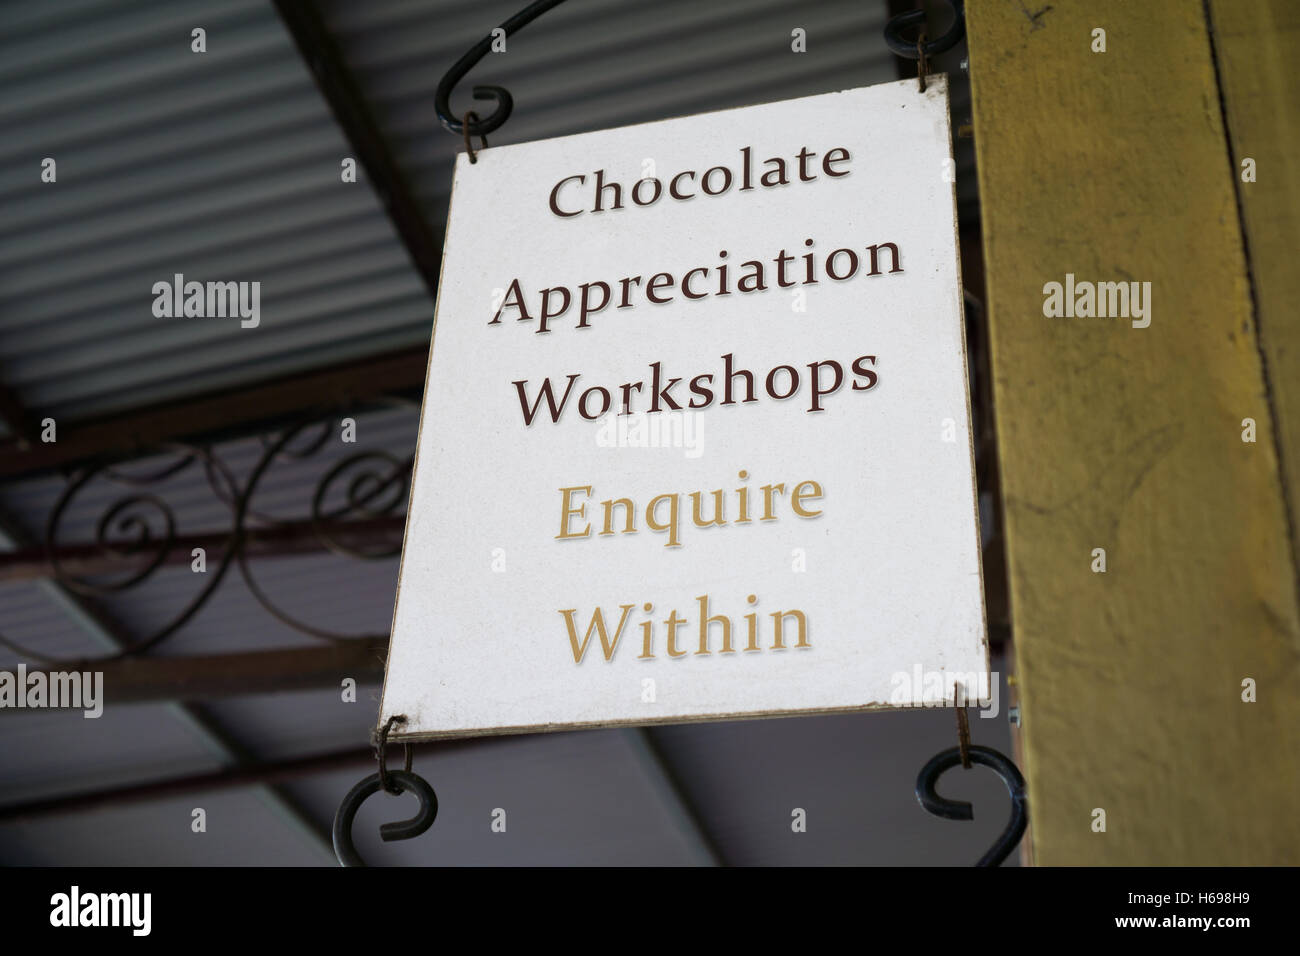 A Chocolate Appreciation Course? Stock Photo